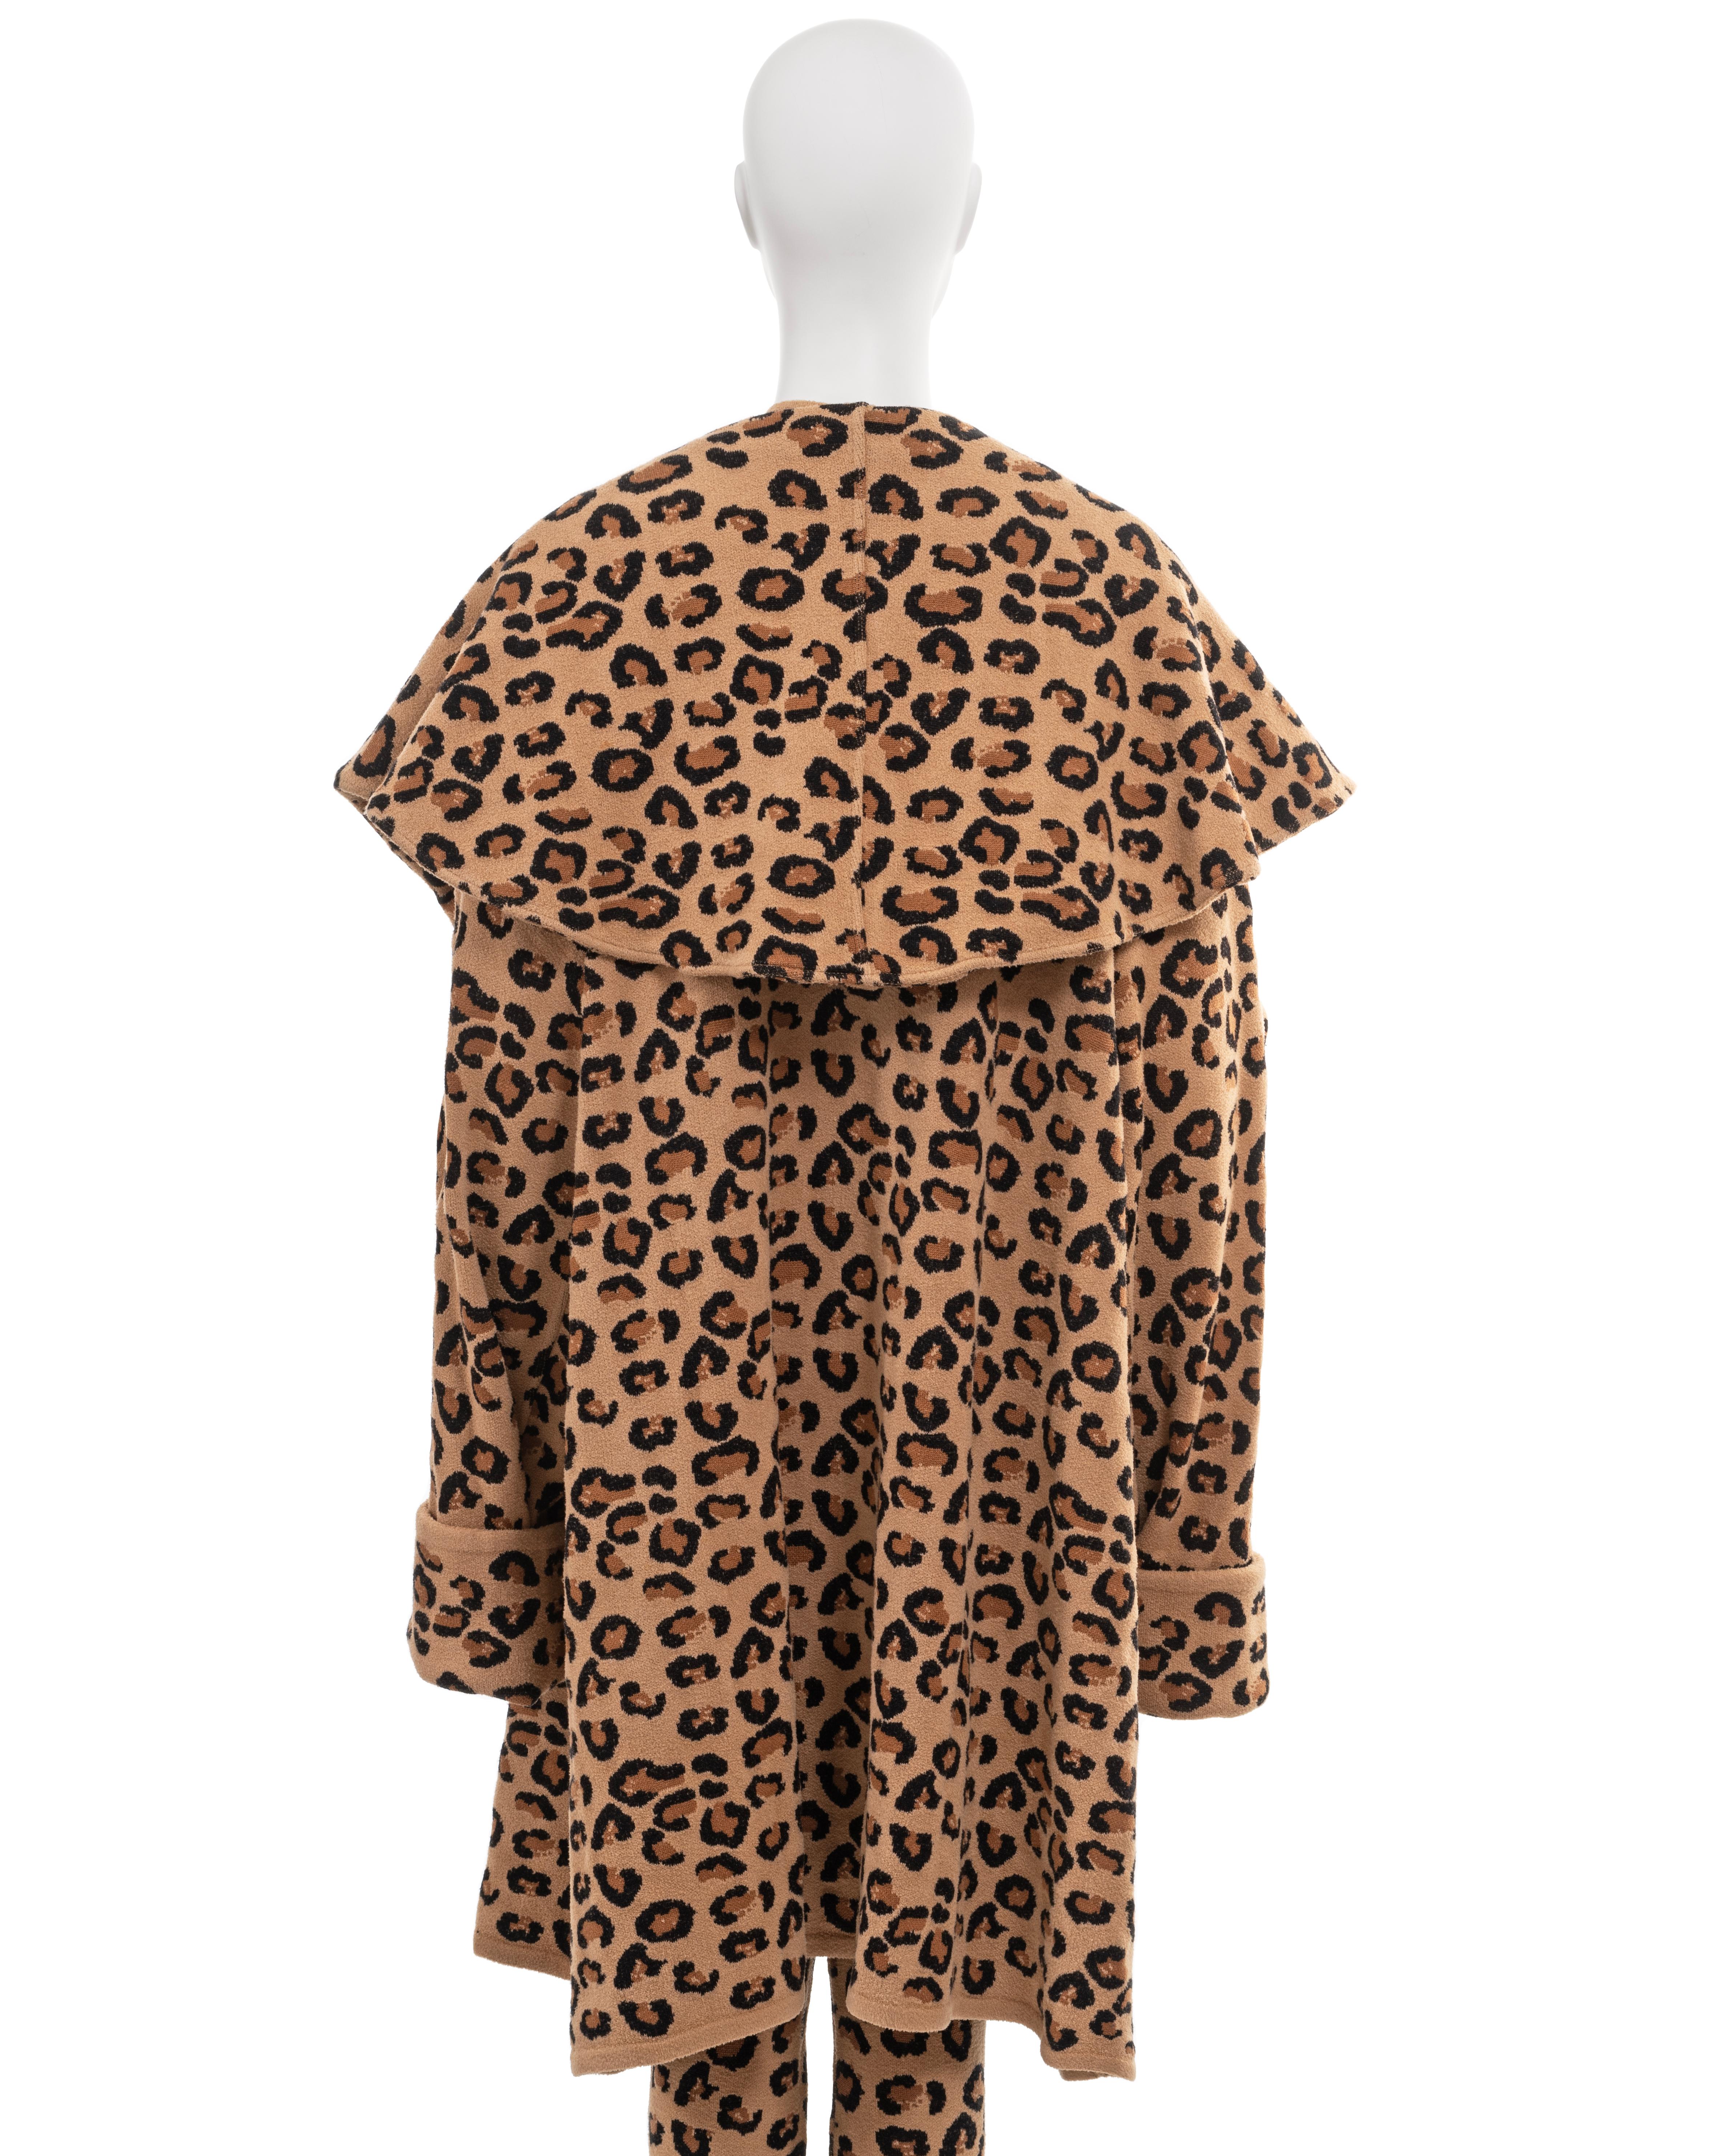 Azzedine Alaia leopard jacquard-knit catsuit and coat runway ensemble, fw 1991 10